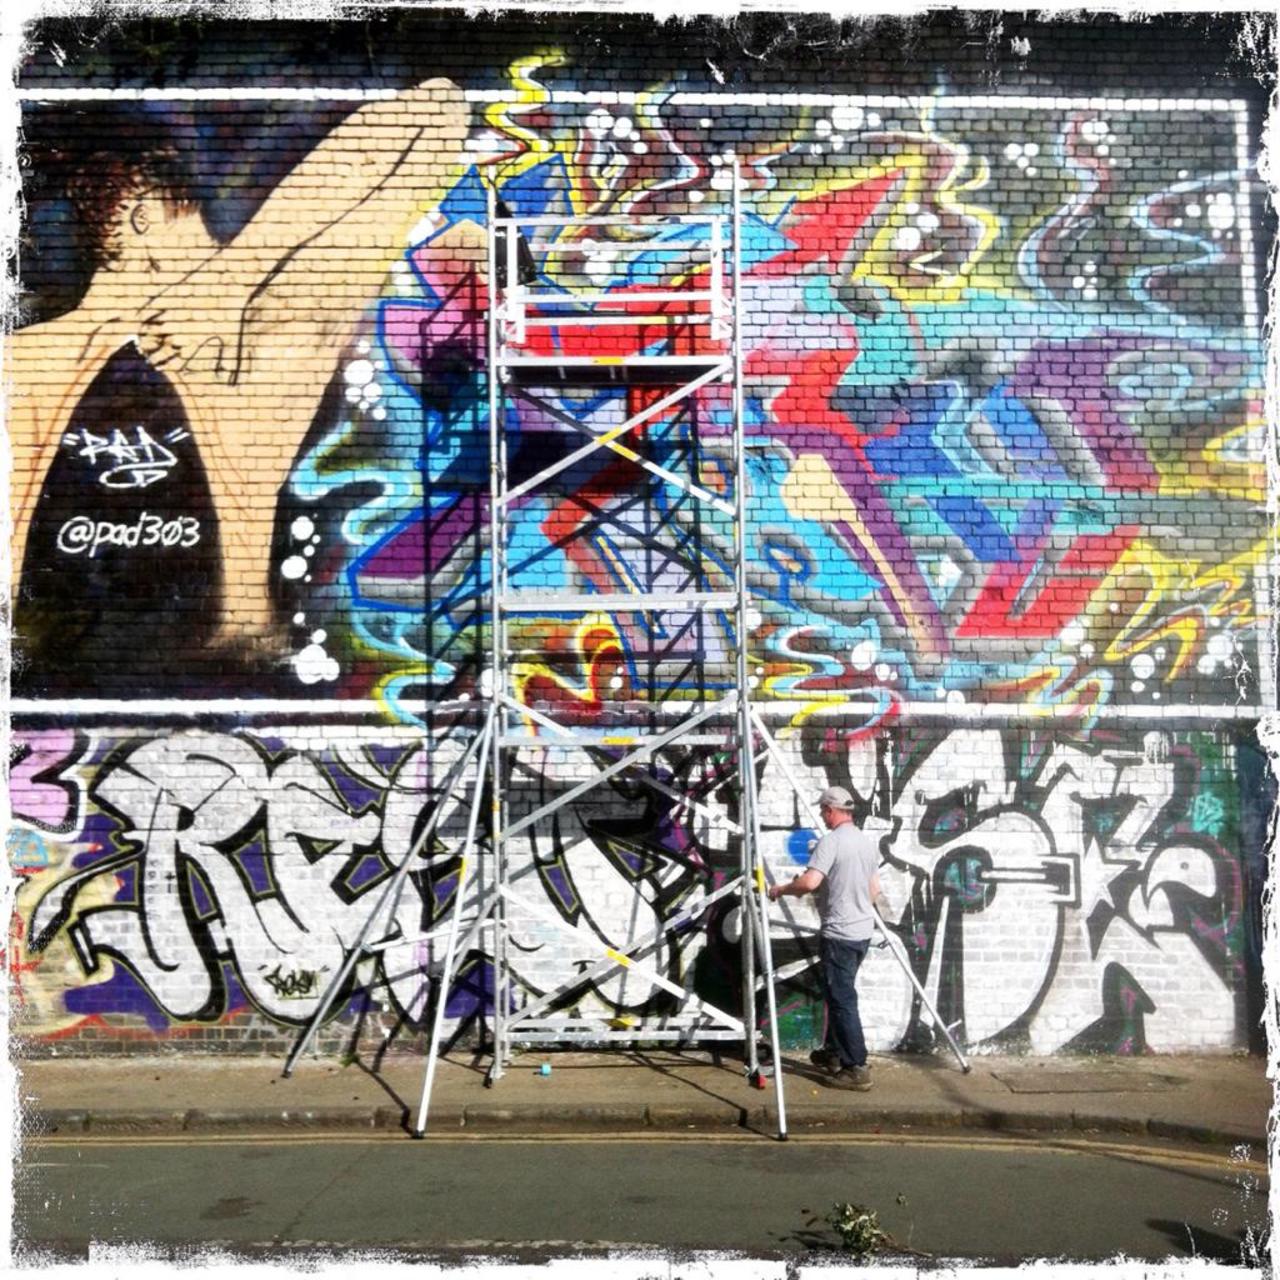 New #streetart taking shape in Braithwaite Street today #art #graffiti @LDNGraffiti @streetart_ldn @ShoreditchTours http://t.co/JZIrmEHBlY